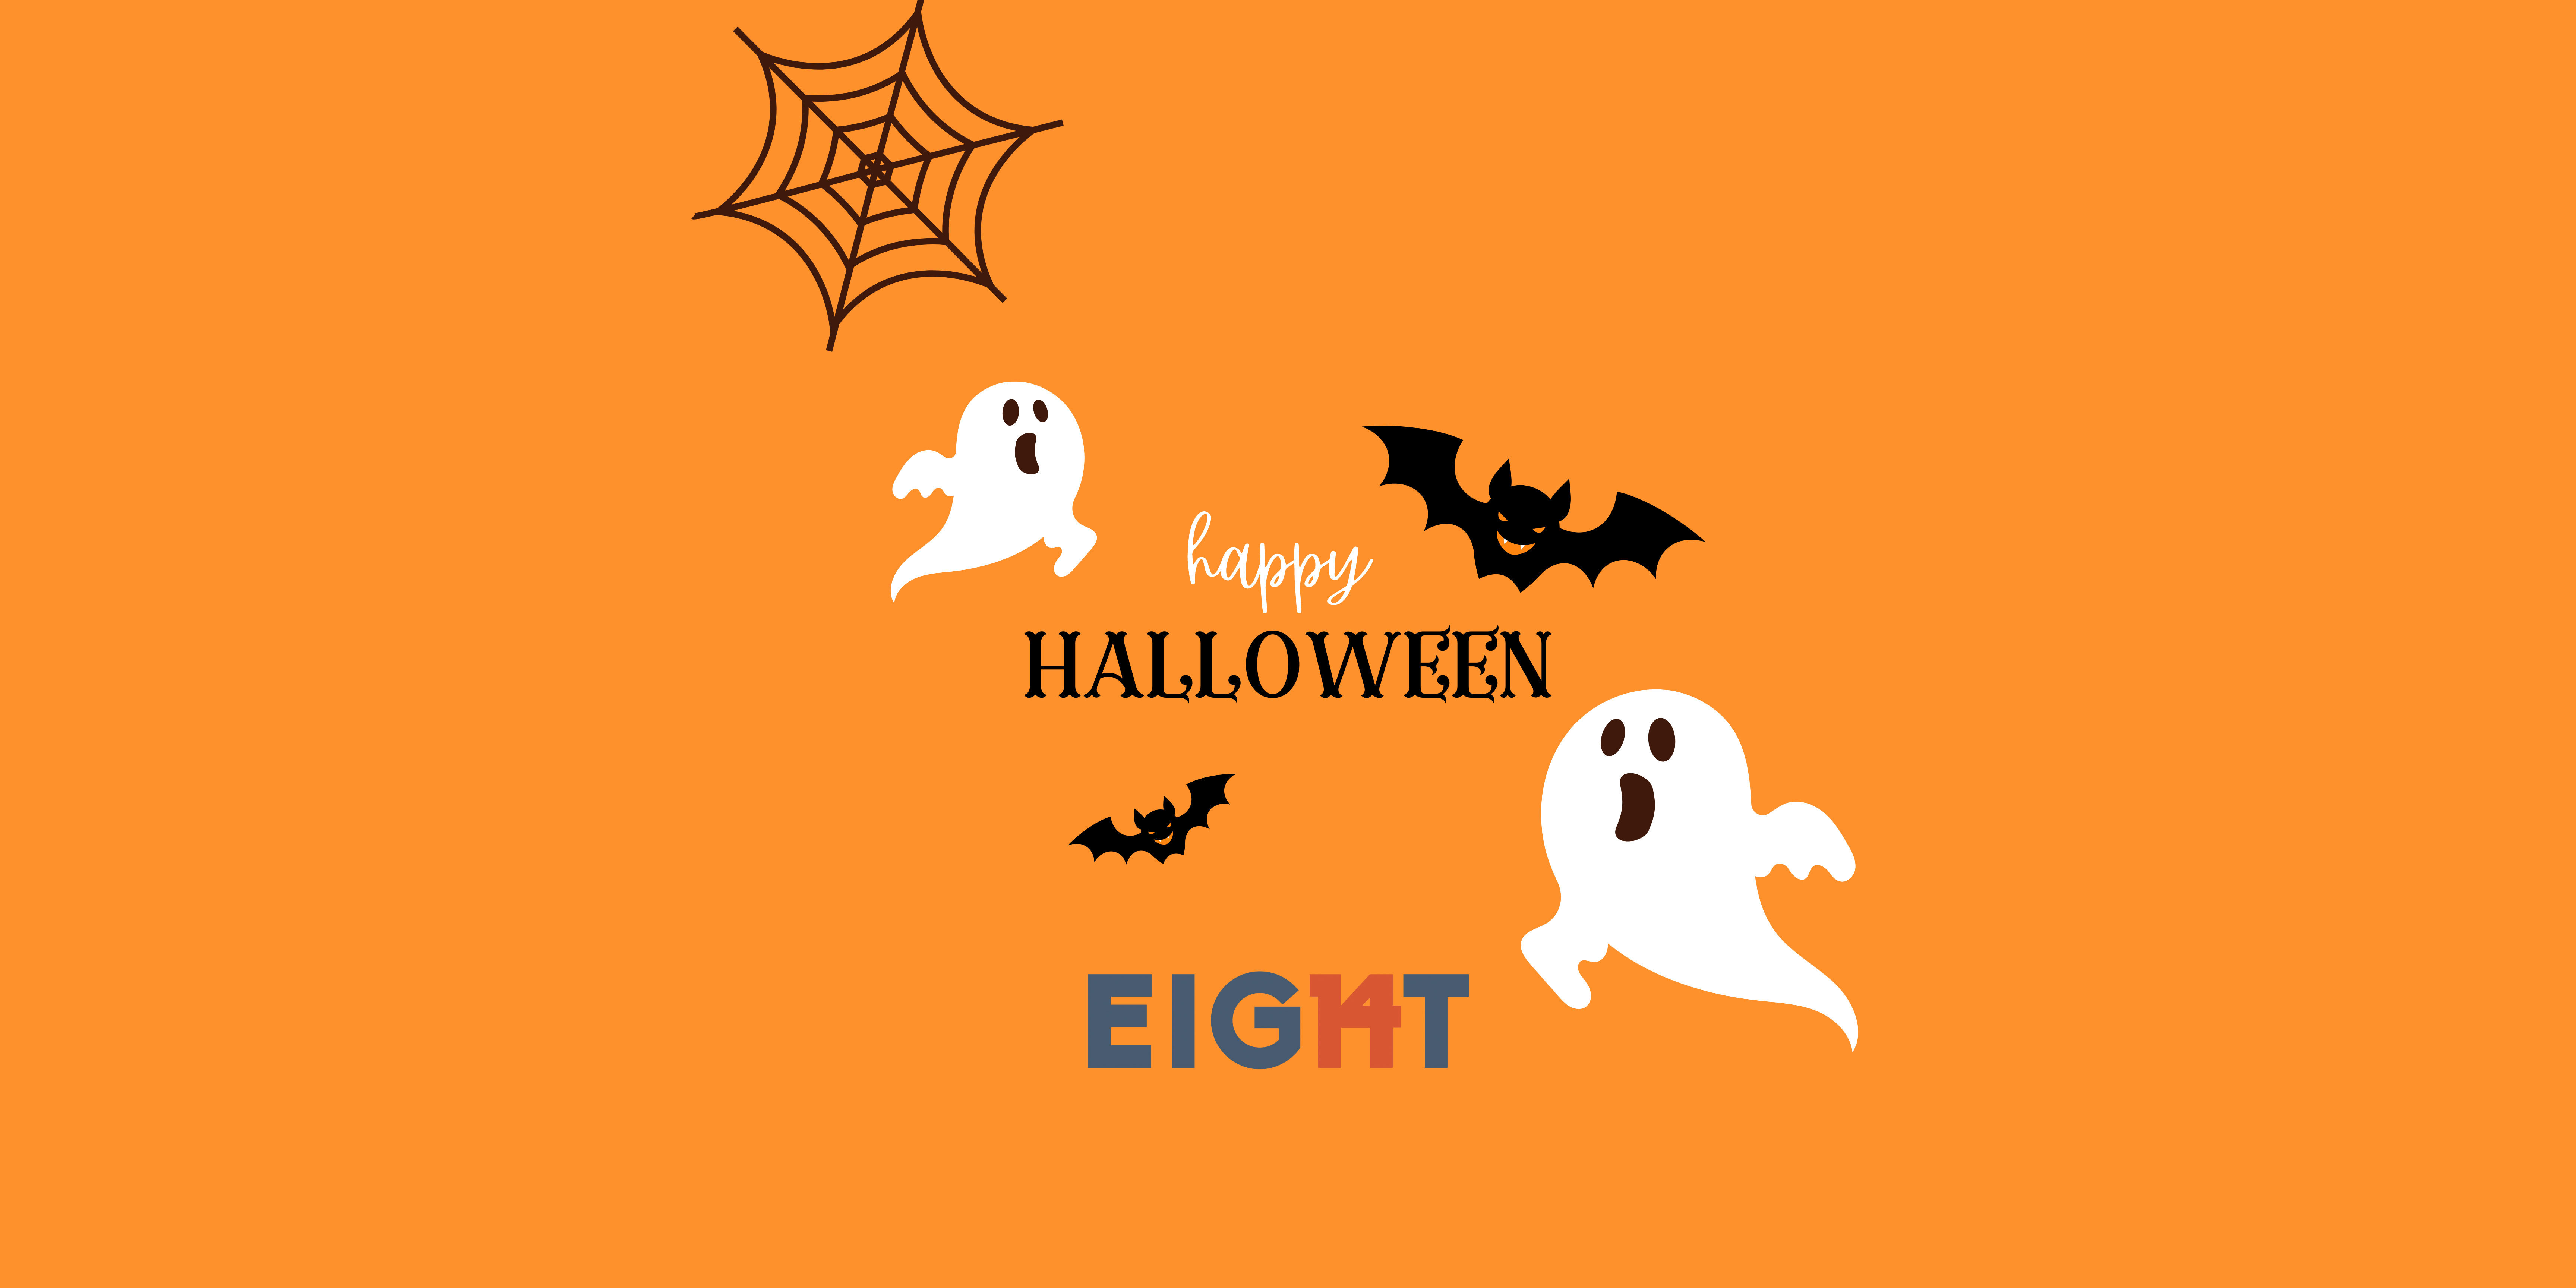 Happy Halloween from EIG14T!